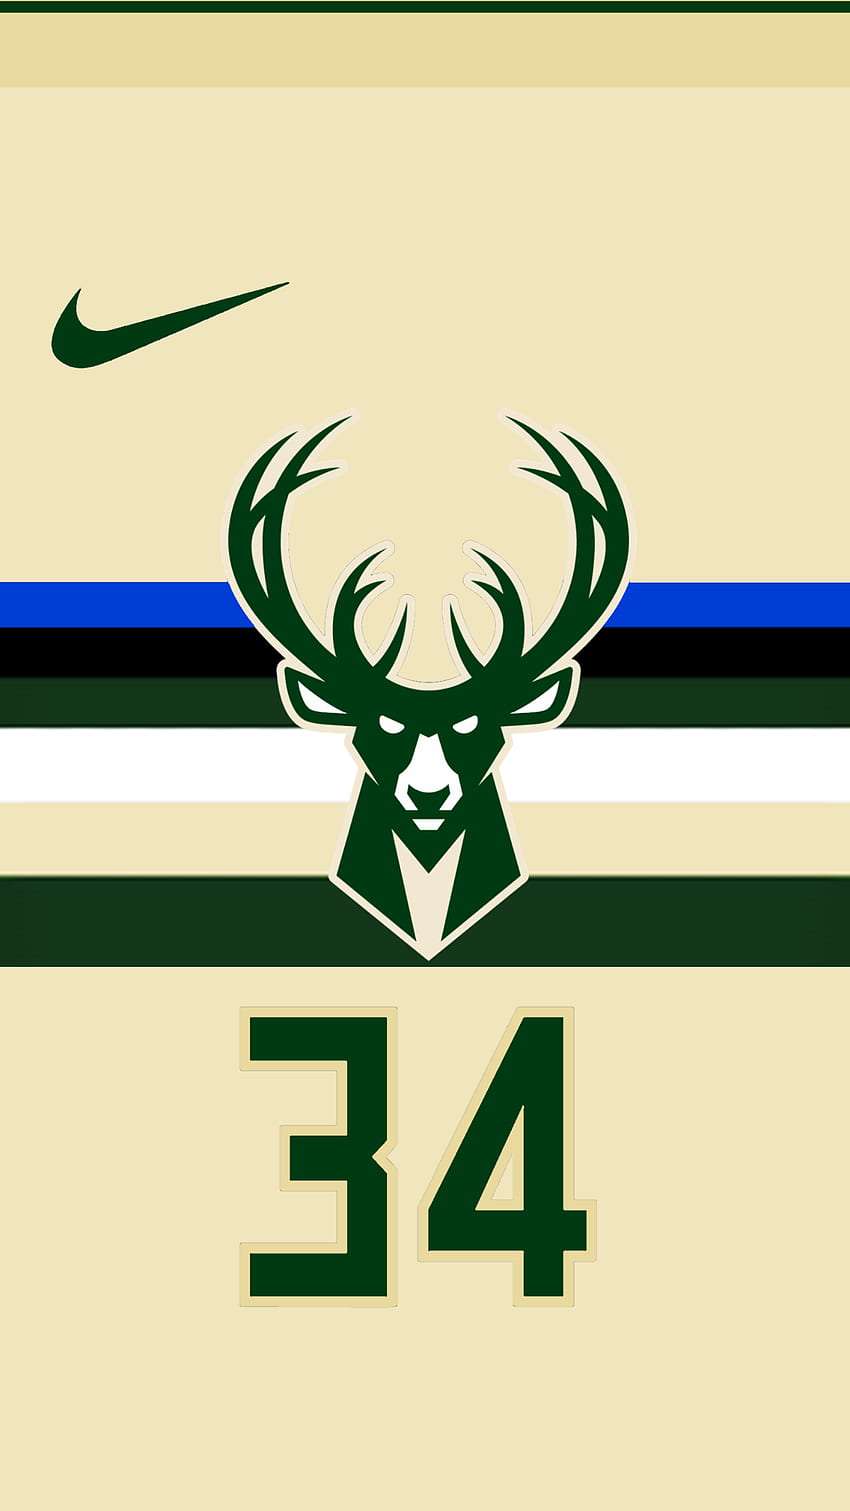 Luigi DePaul en NBA Nike Jersey en 2021. Nba , Bucks logo, Michael jordan iphone, Milwaukee Bucks Logo fondo de pantalla del teléfono